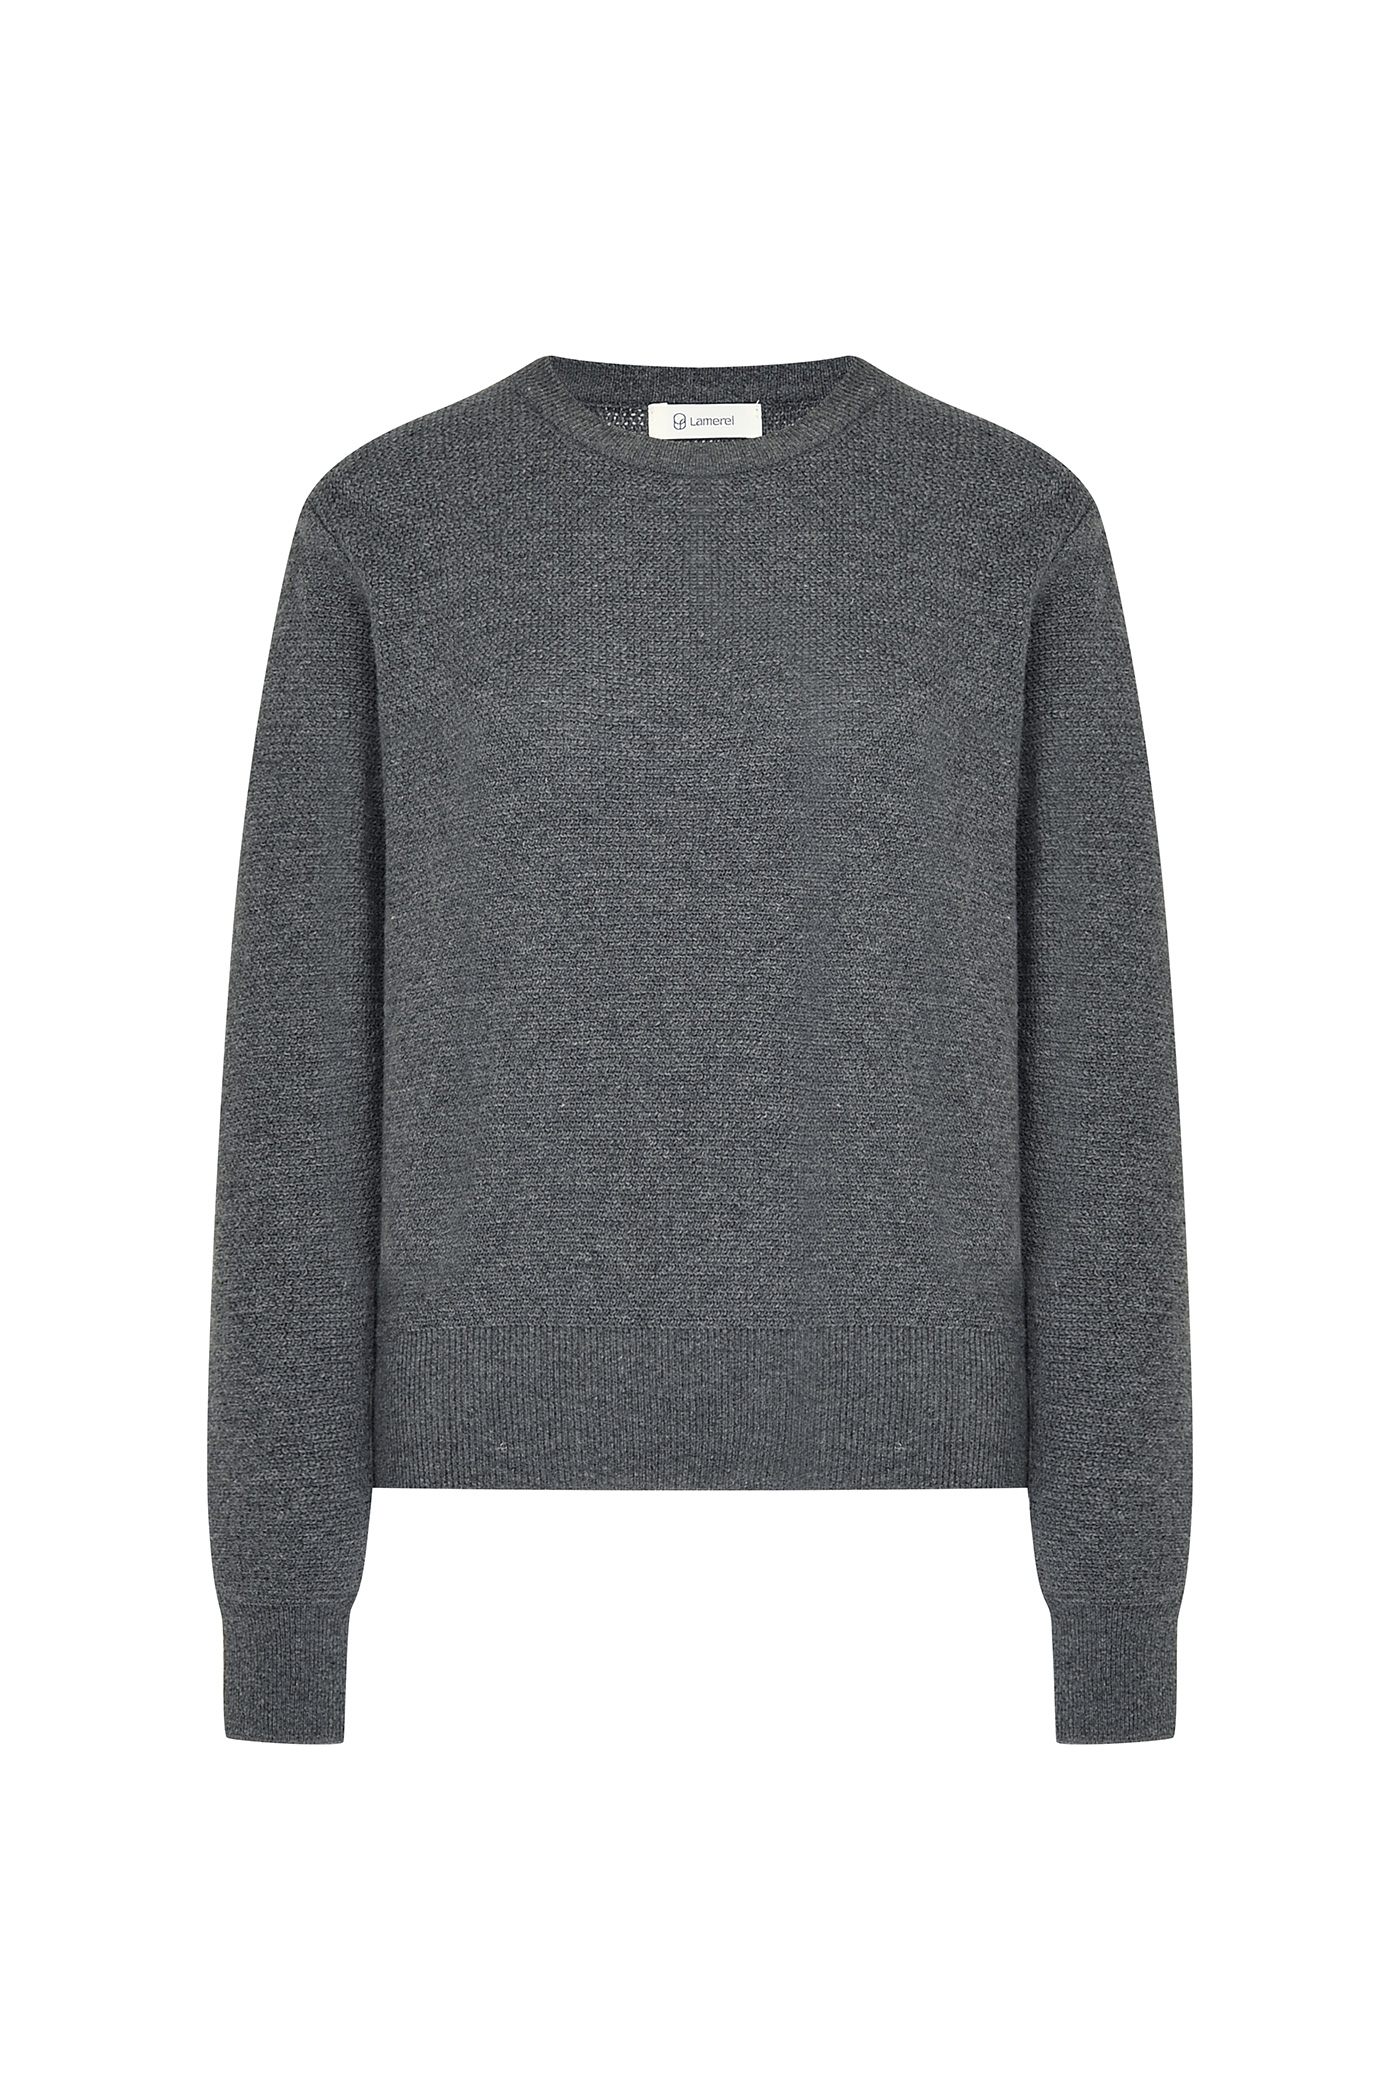 [SAMPLE]Wool Blend Knit Top[LMBBAUKN150]-Gray